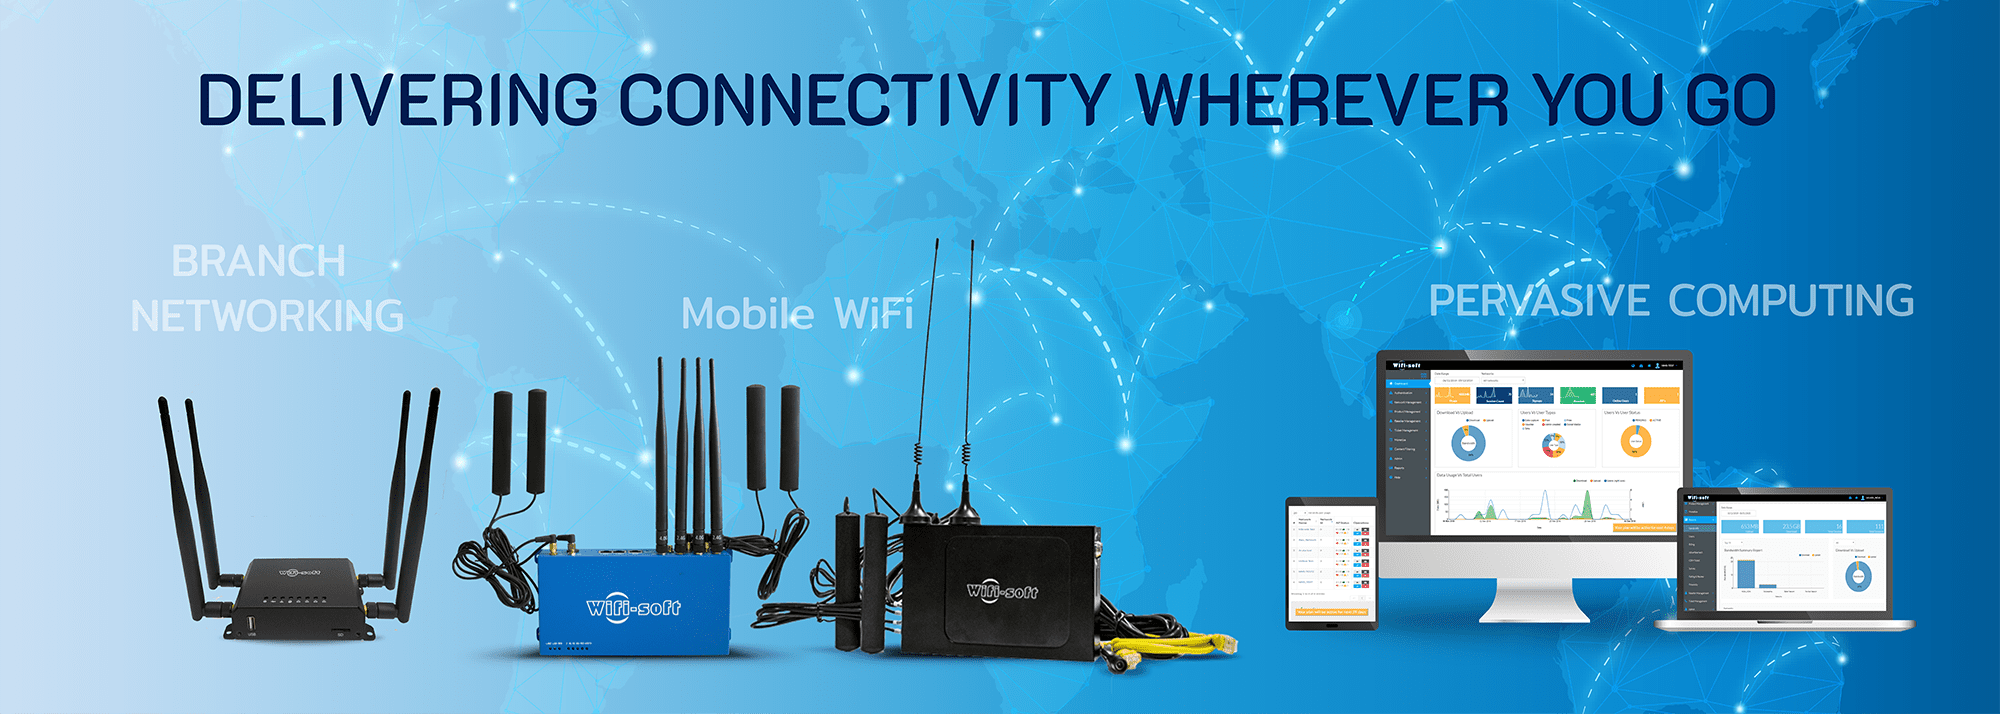 Wifi-Soft Clients - Enterprise Wi-Fi and Hotspots Solution